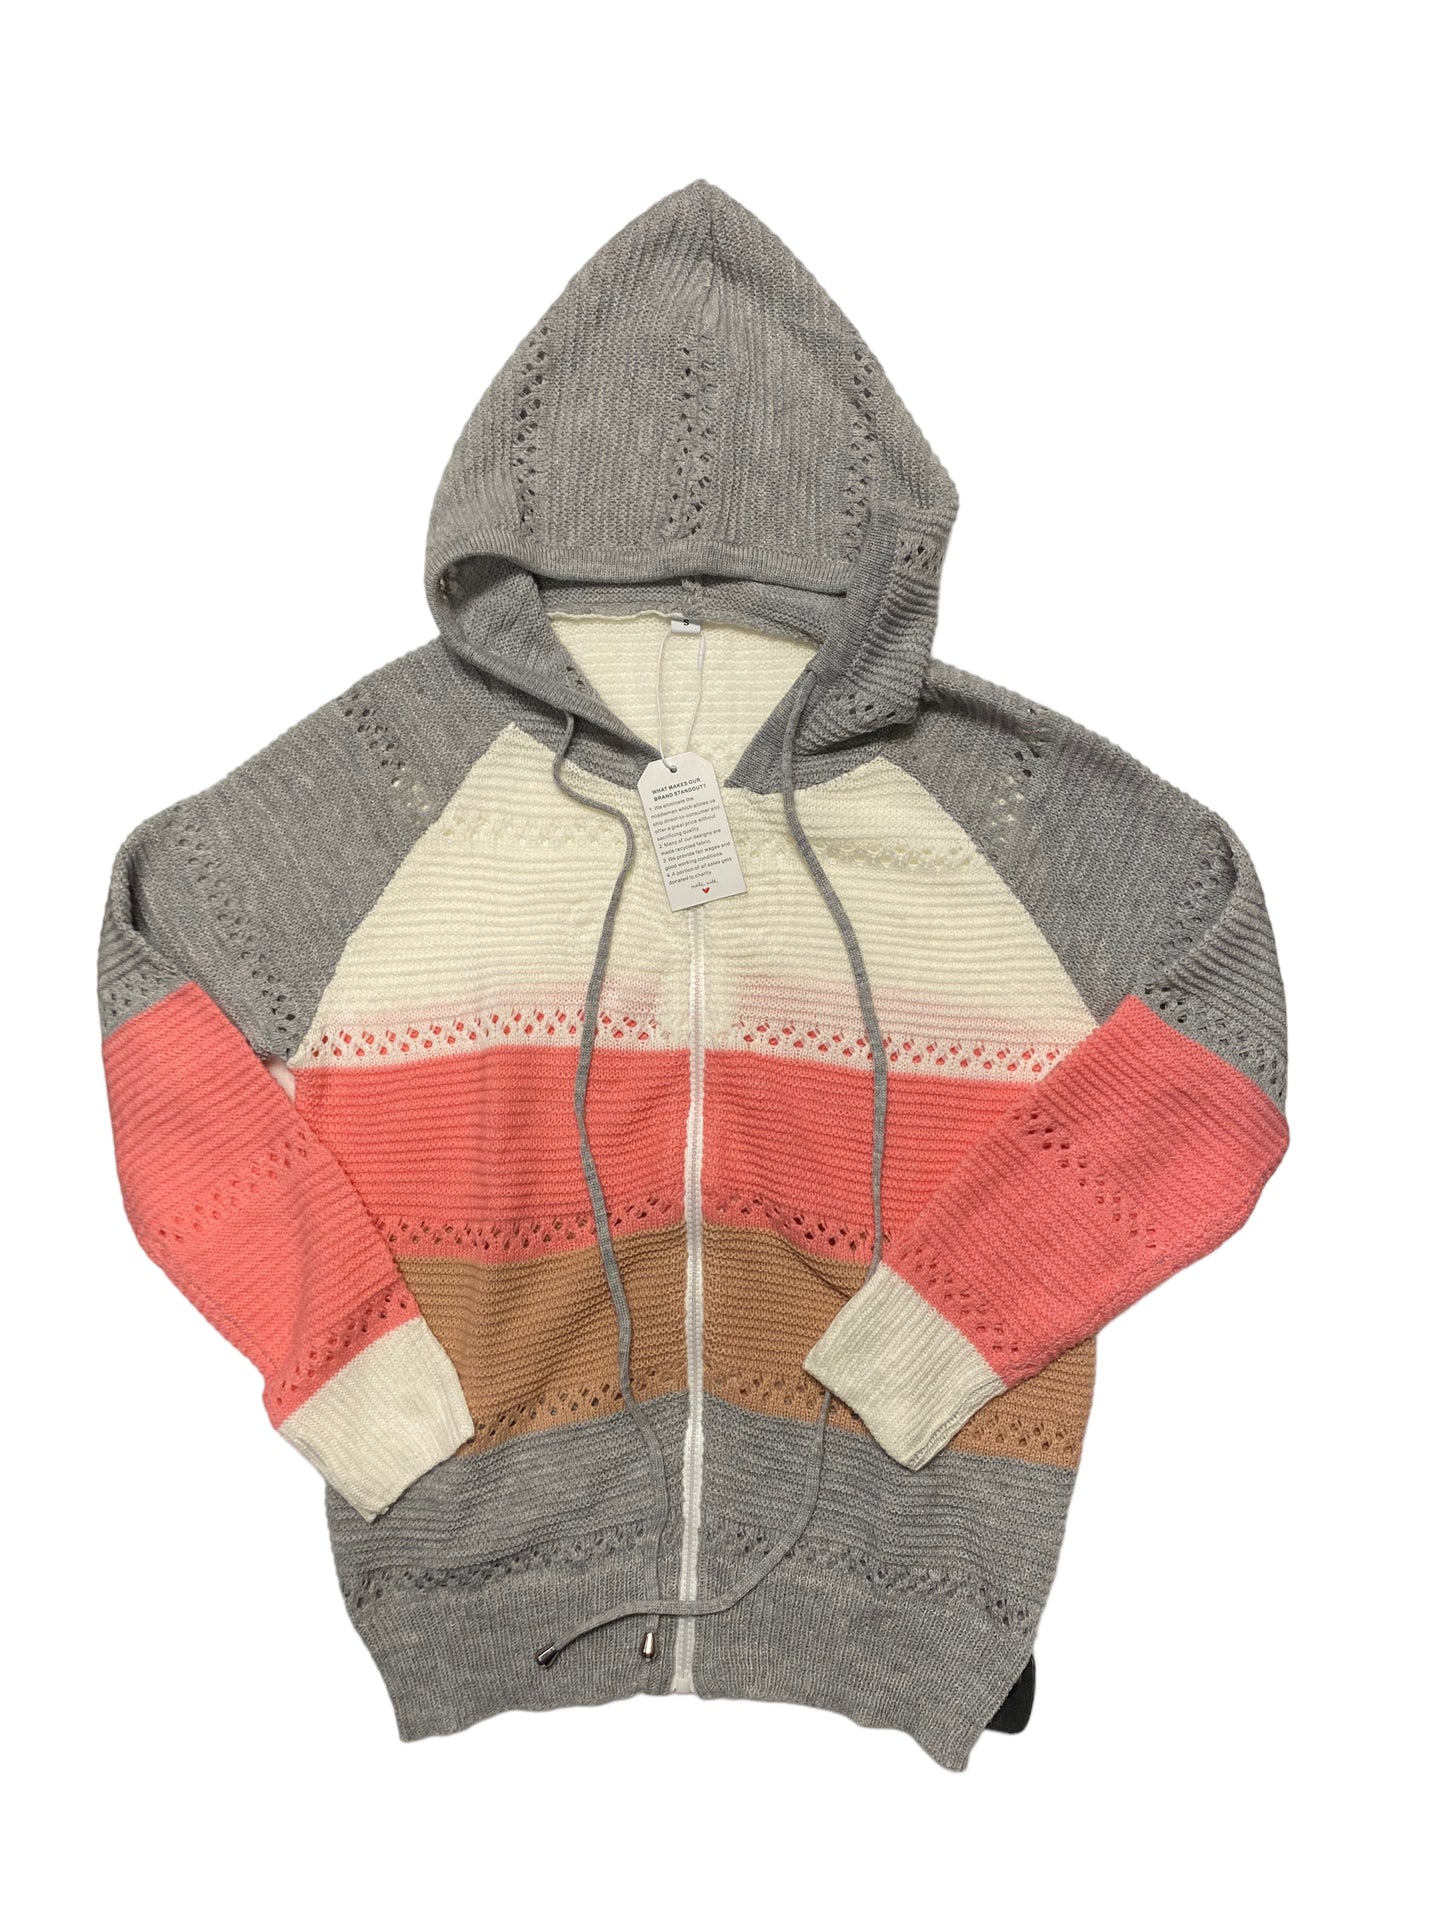 Multi-colored Sweater Cme, Size S